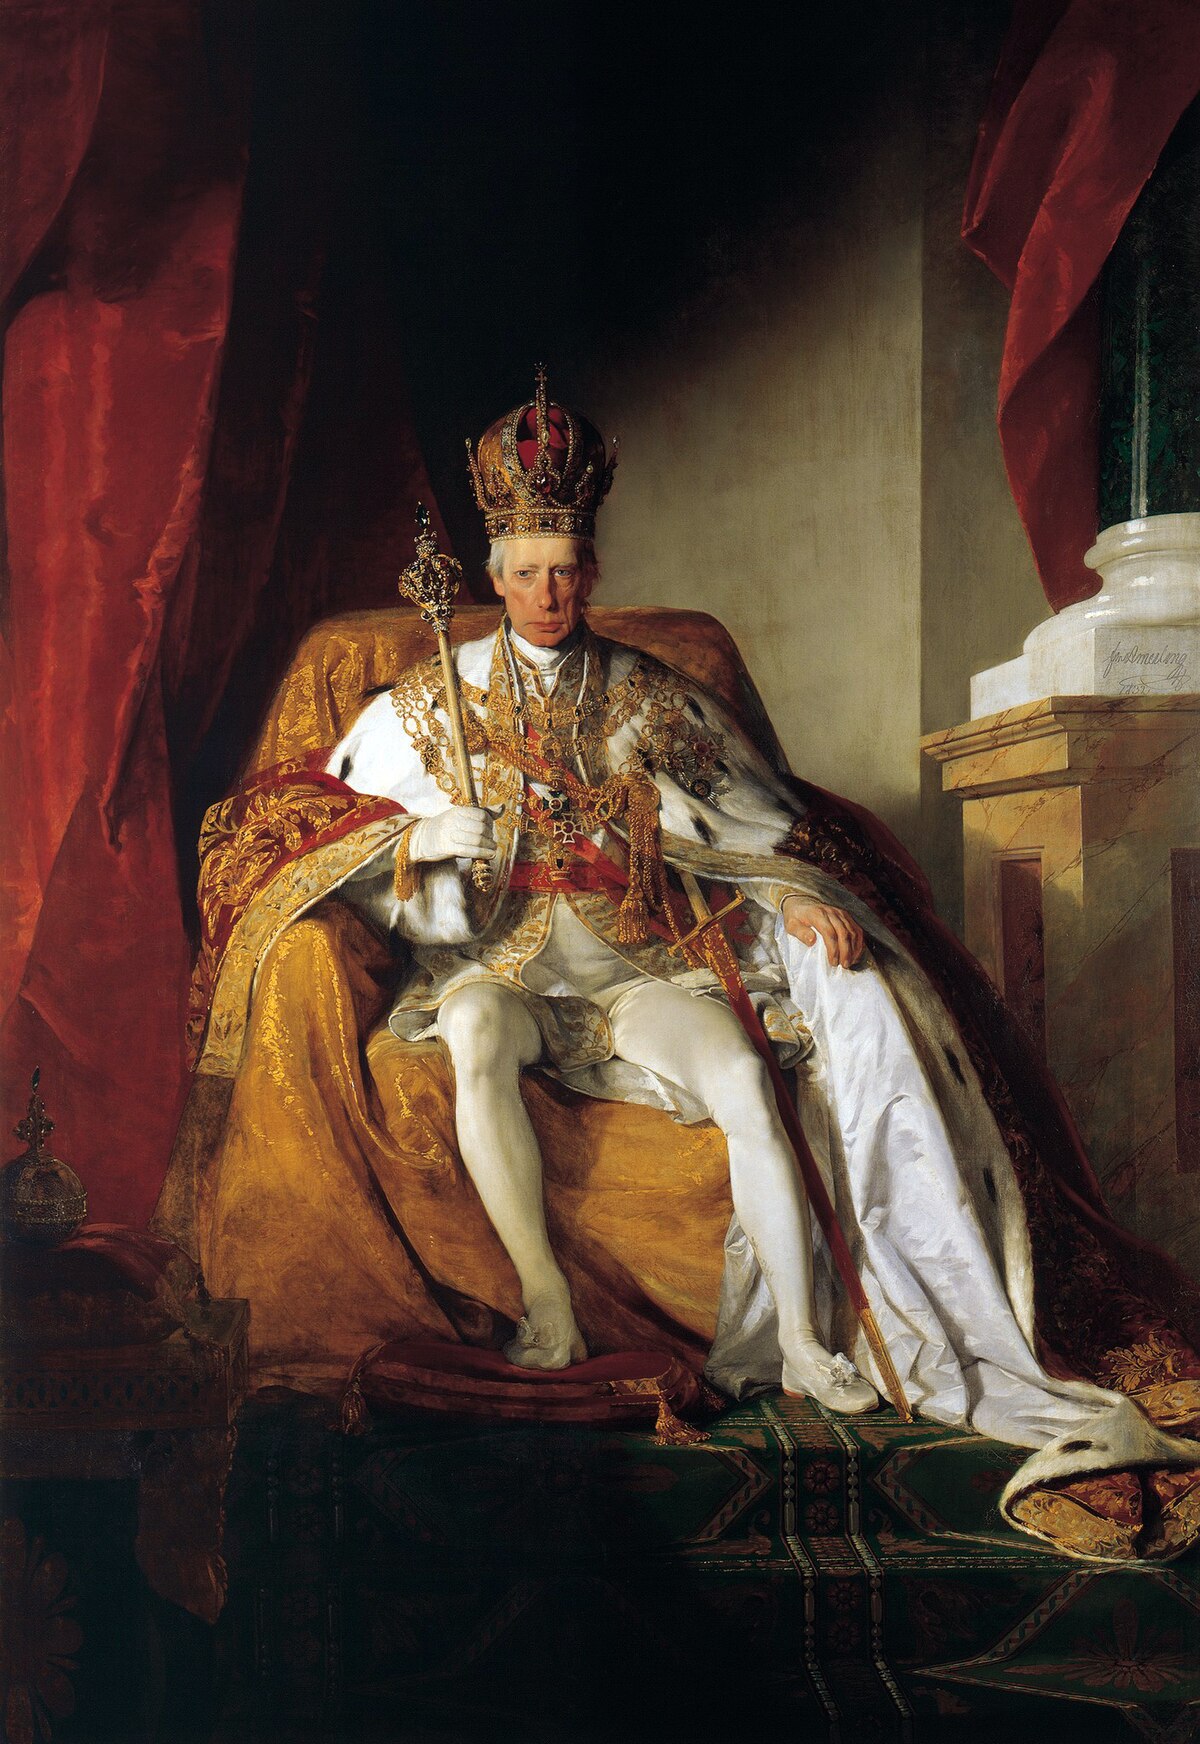 Francis II, Holy Roman Emperor by Friedrich von Amerling 003.jpg